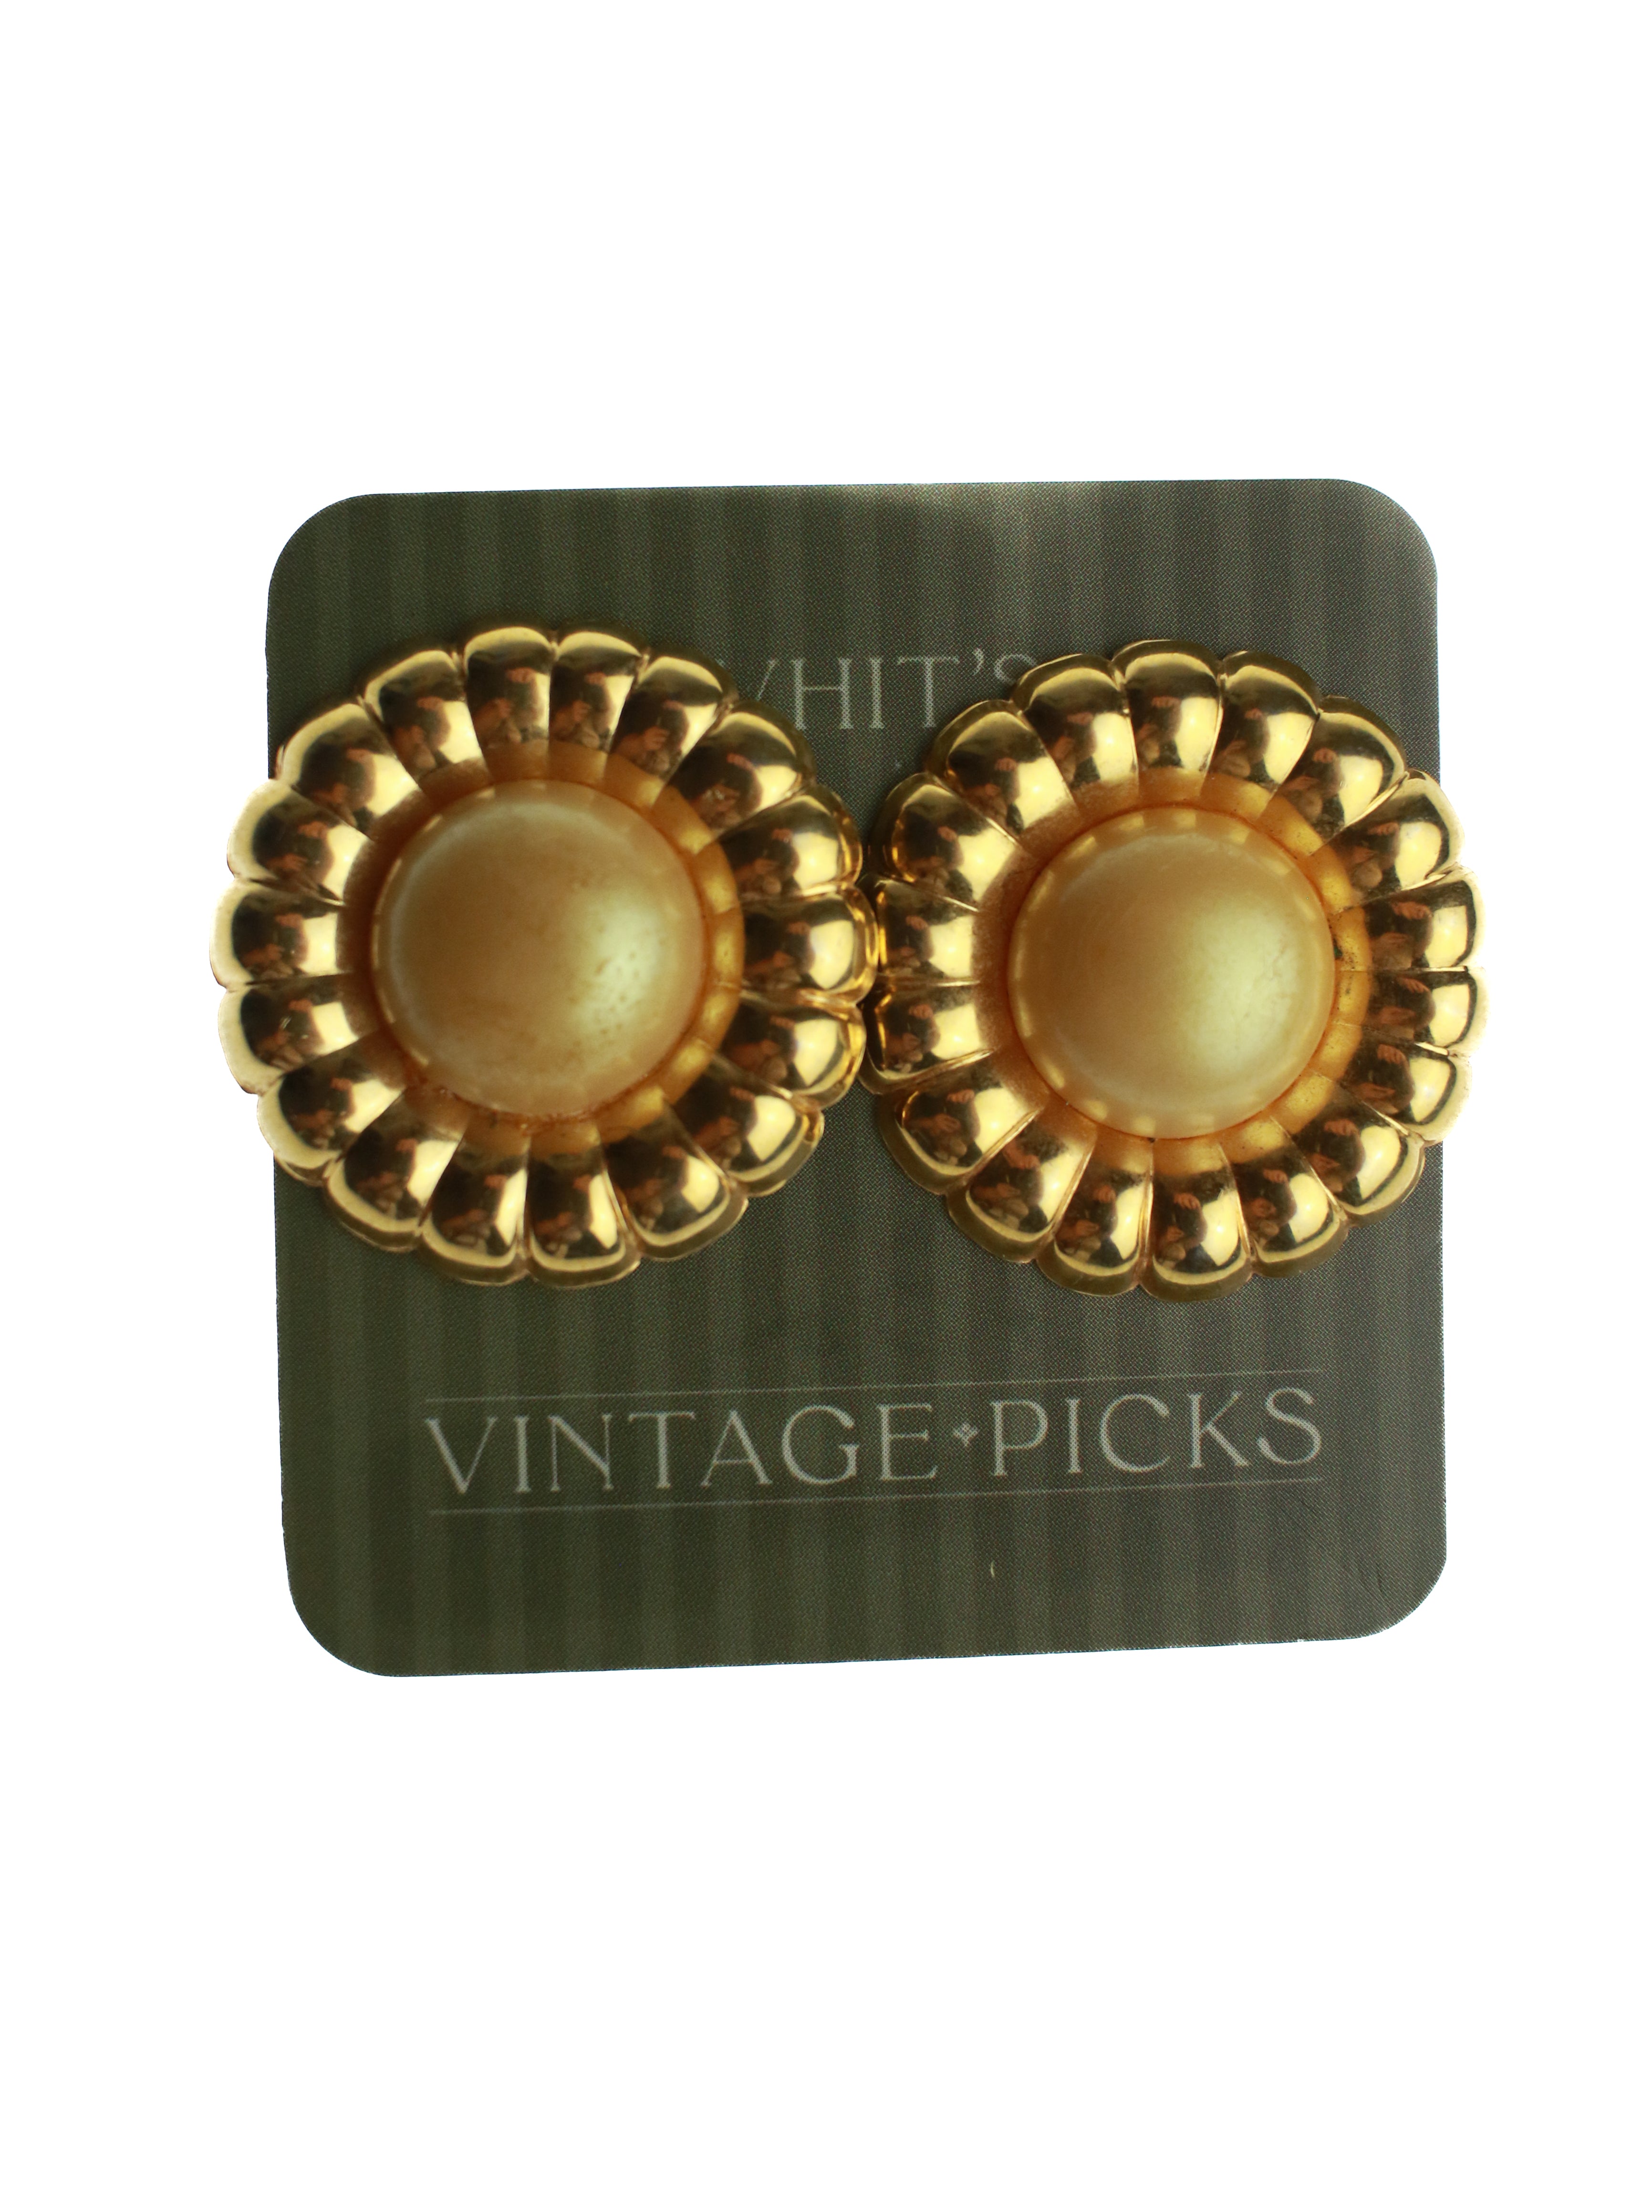 Whit's Vintage Picks- Earrings 132